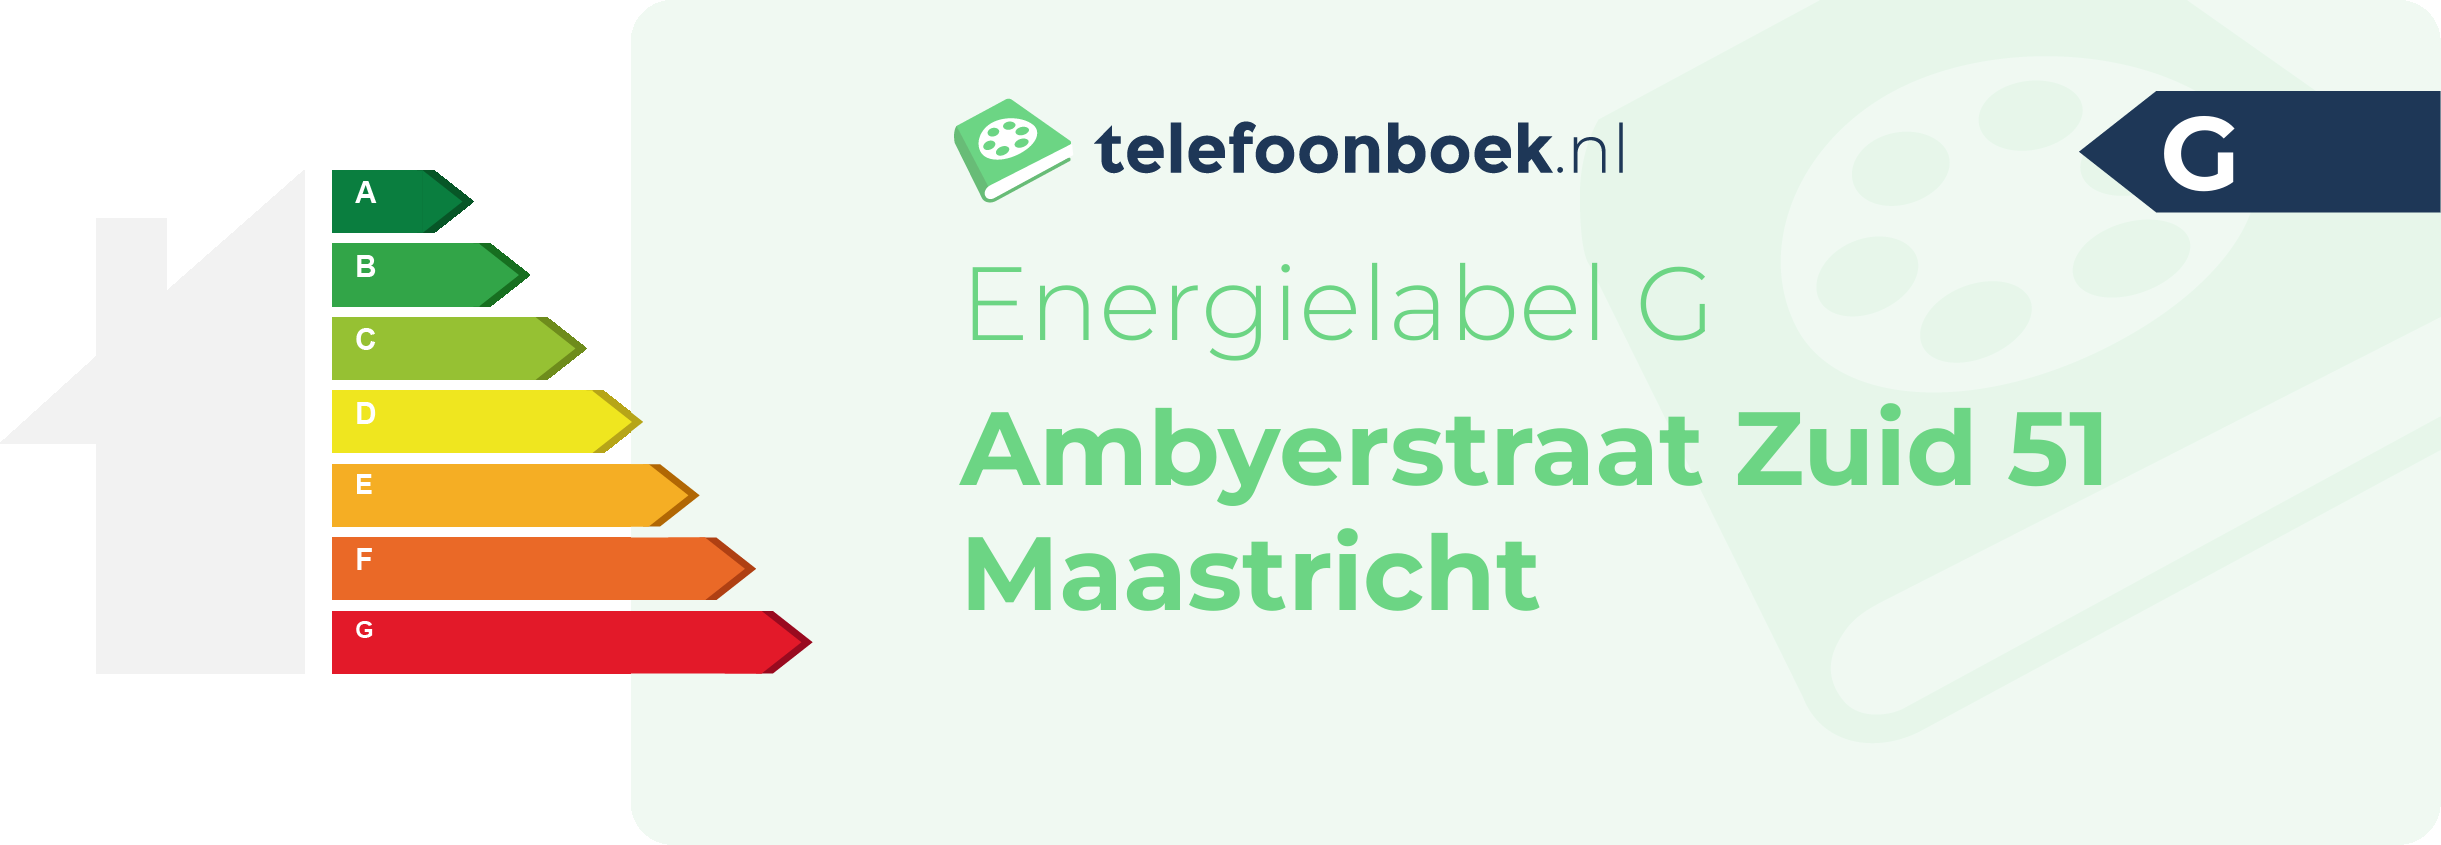 Energielabel Ambyerstraat Zuid 51 Maastricht